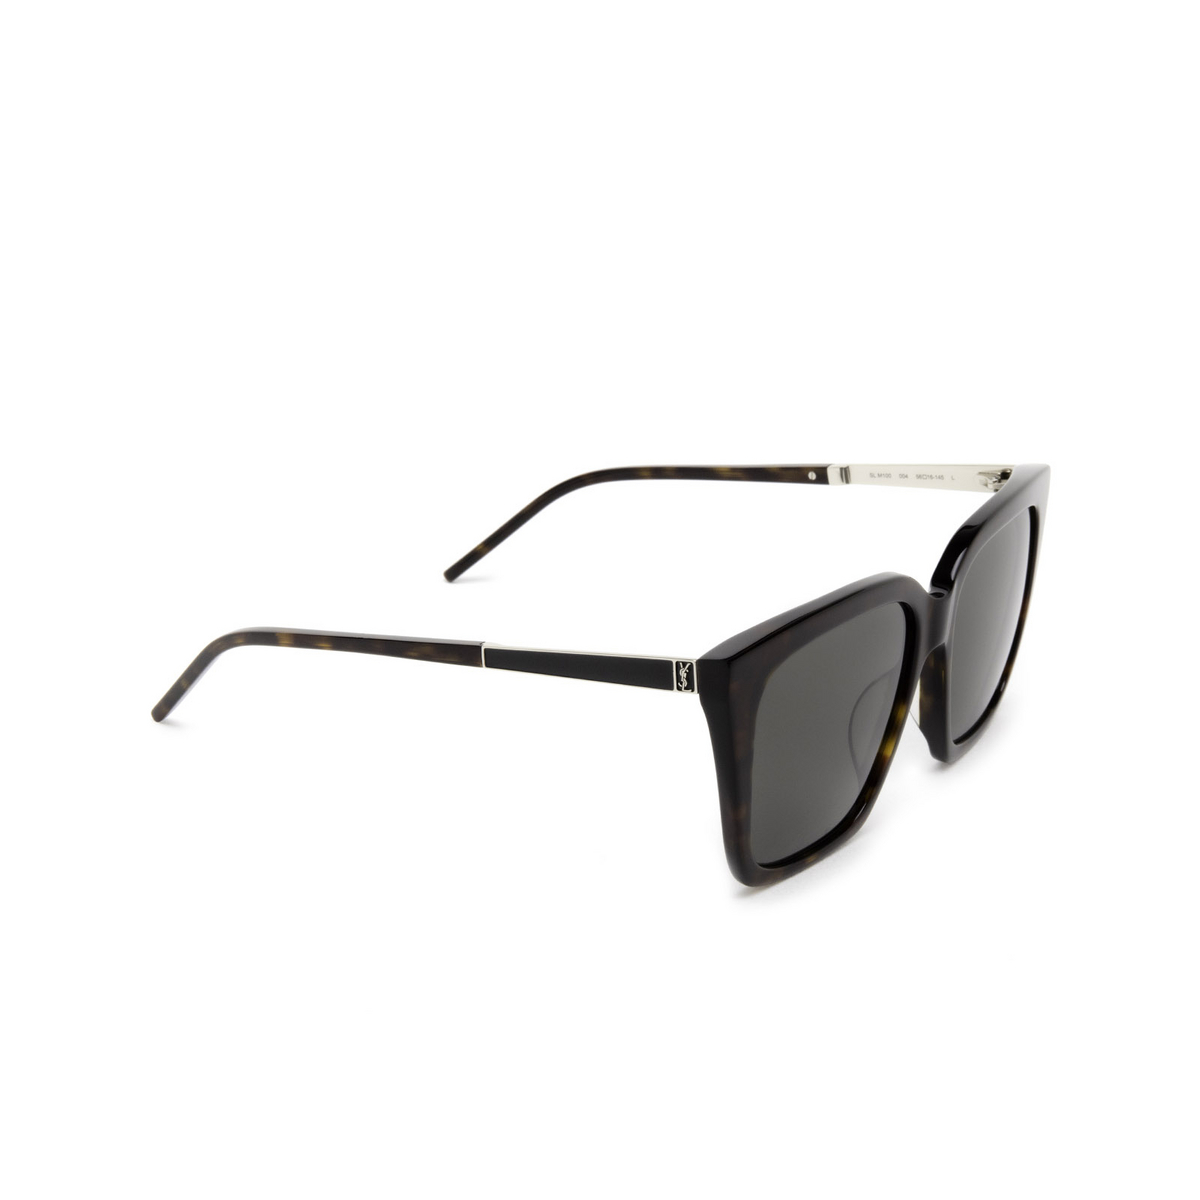 Saint Laurent® Square Sunglasses: SL M100 color Havana 004 - three-quarters view.